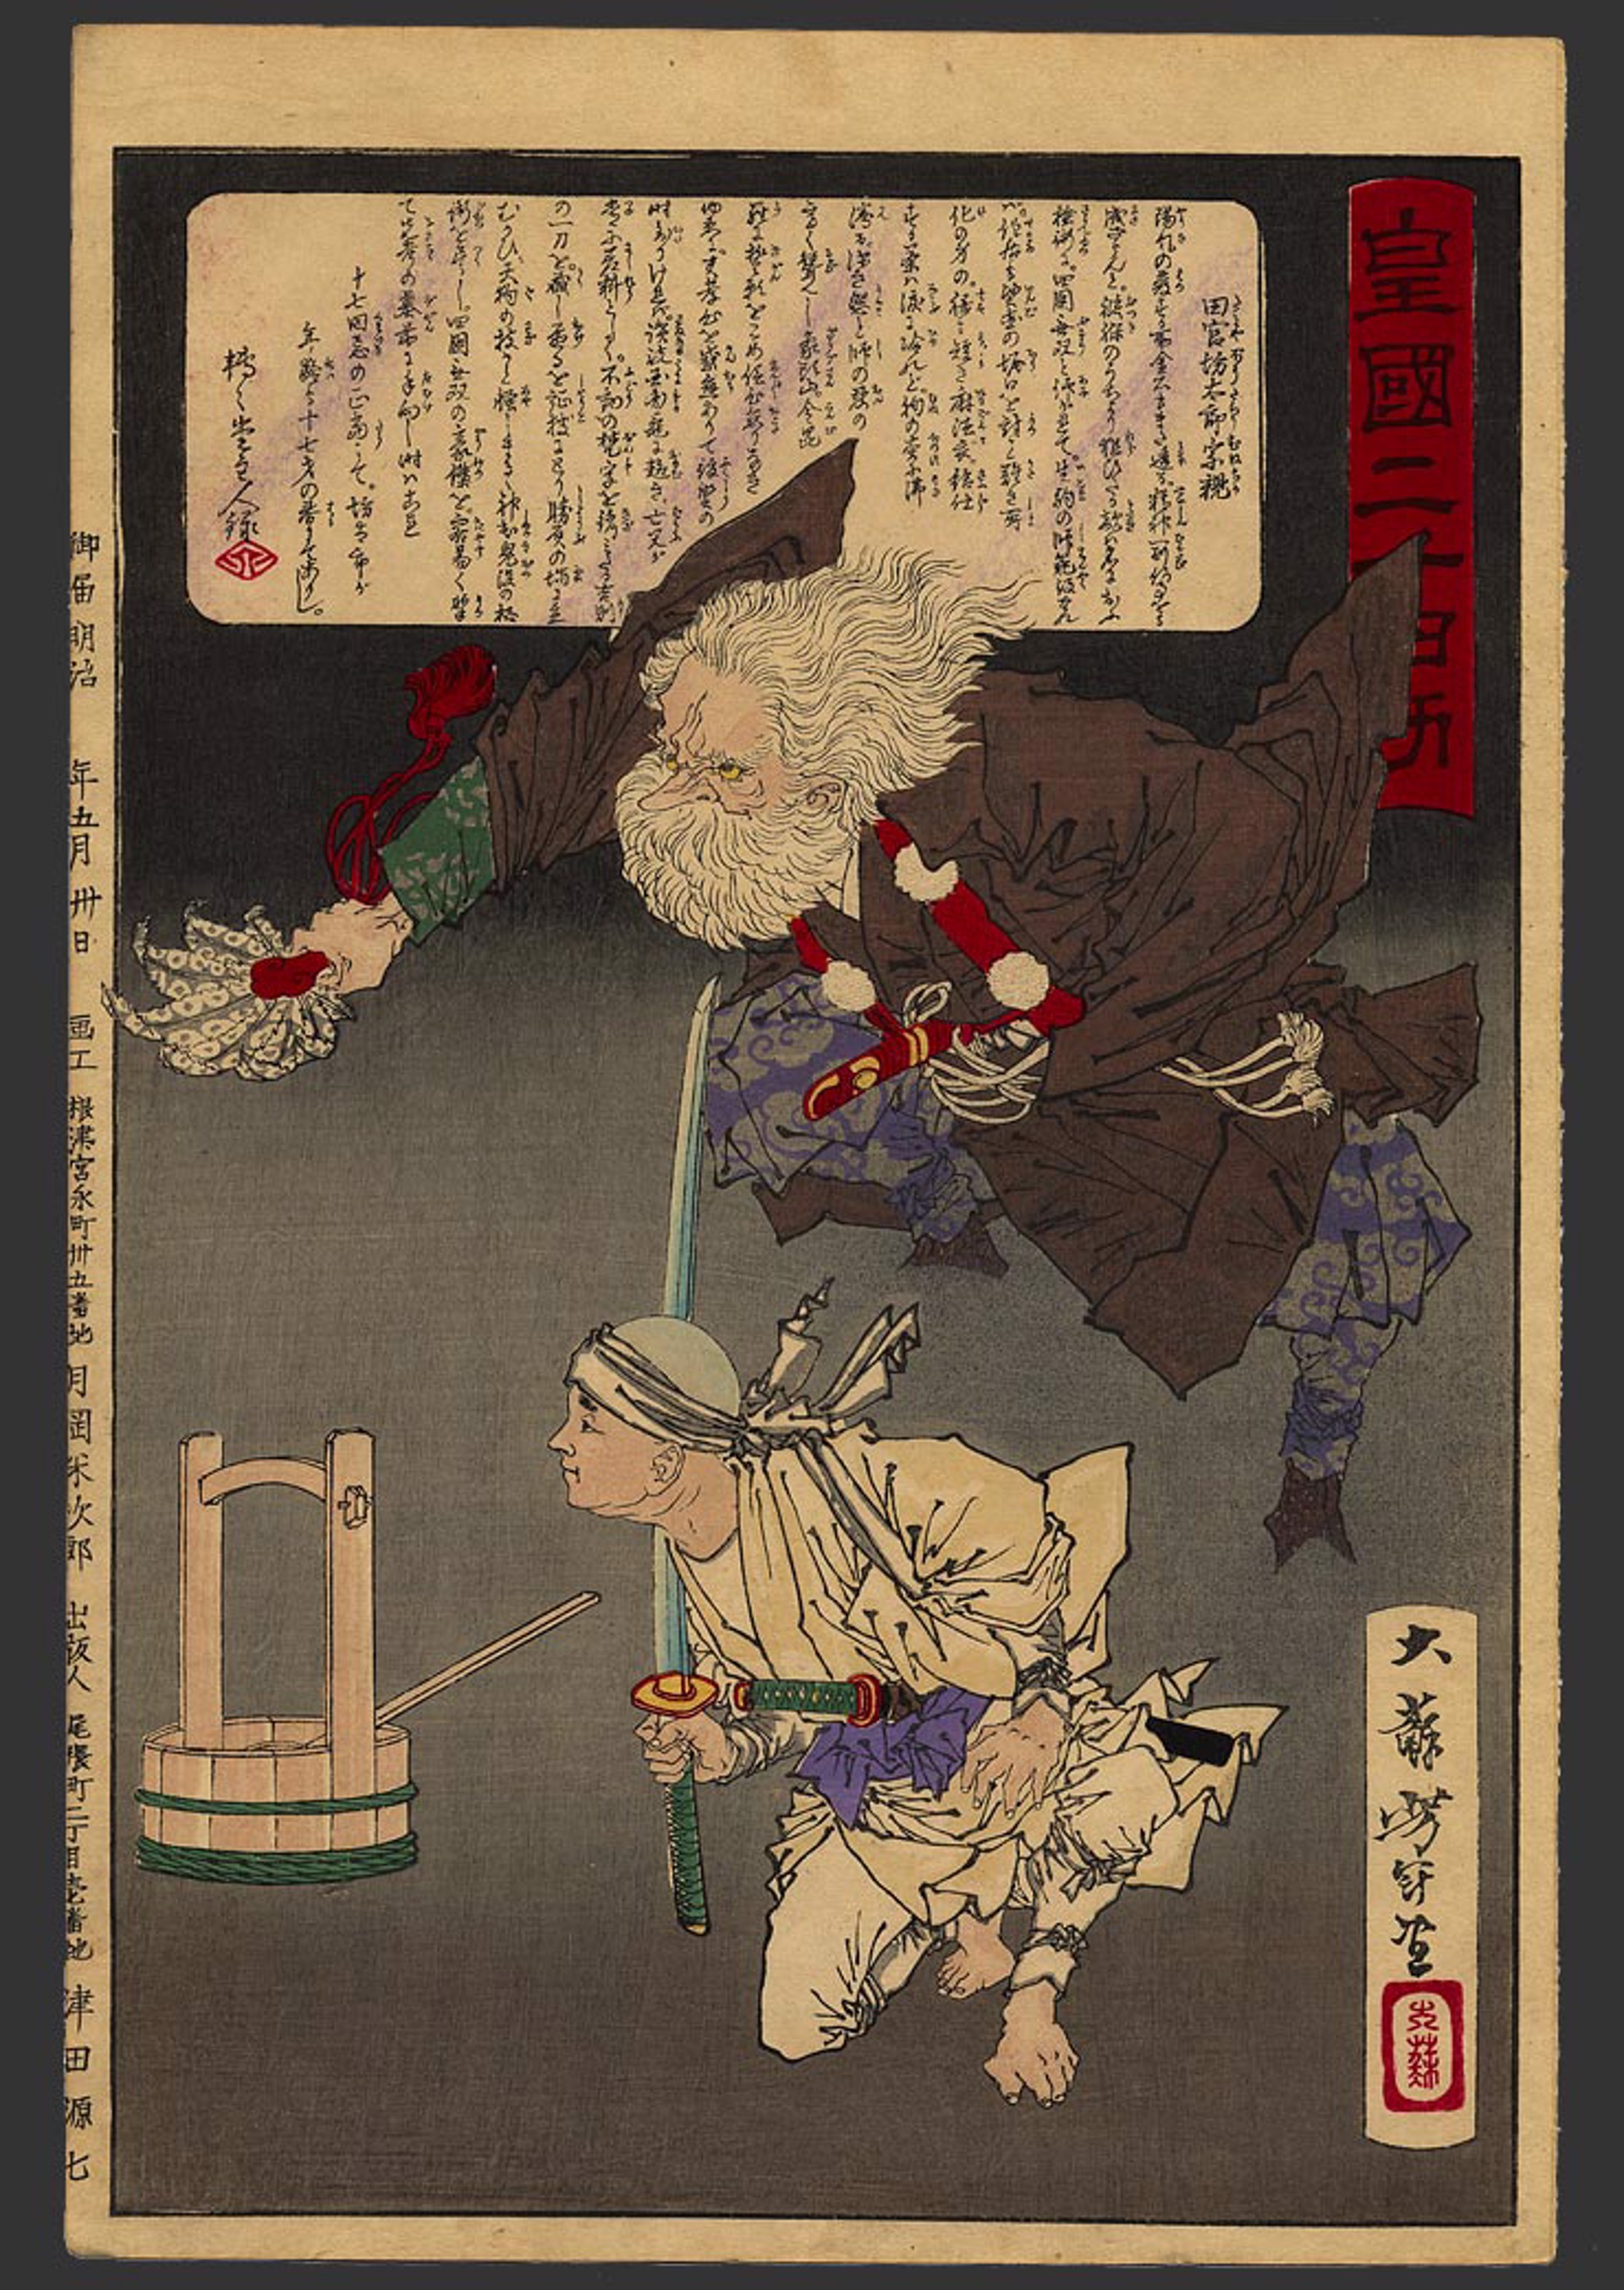 #7 The spirit of the Tengu helping Tamiya Botaro Munechika avenge his fathers death. 24 Accomplishments in Imperial Japan by Yoshitoshi